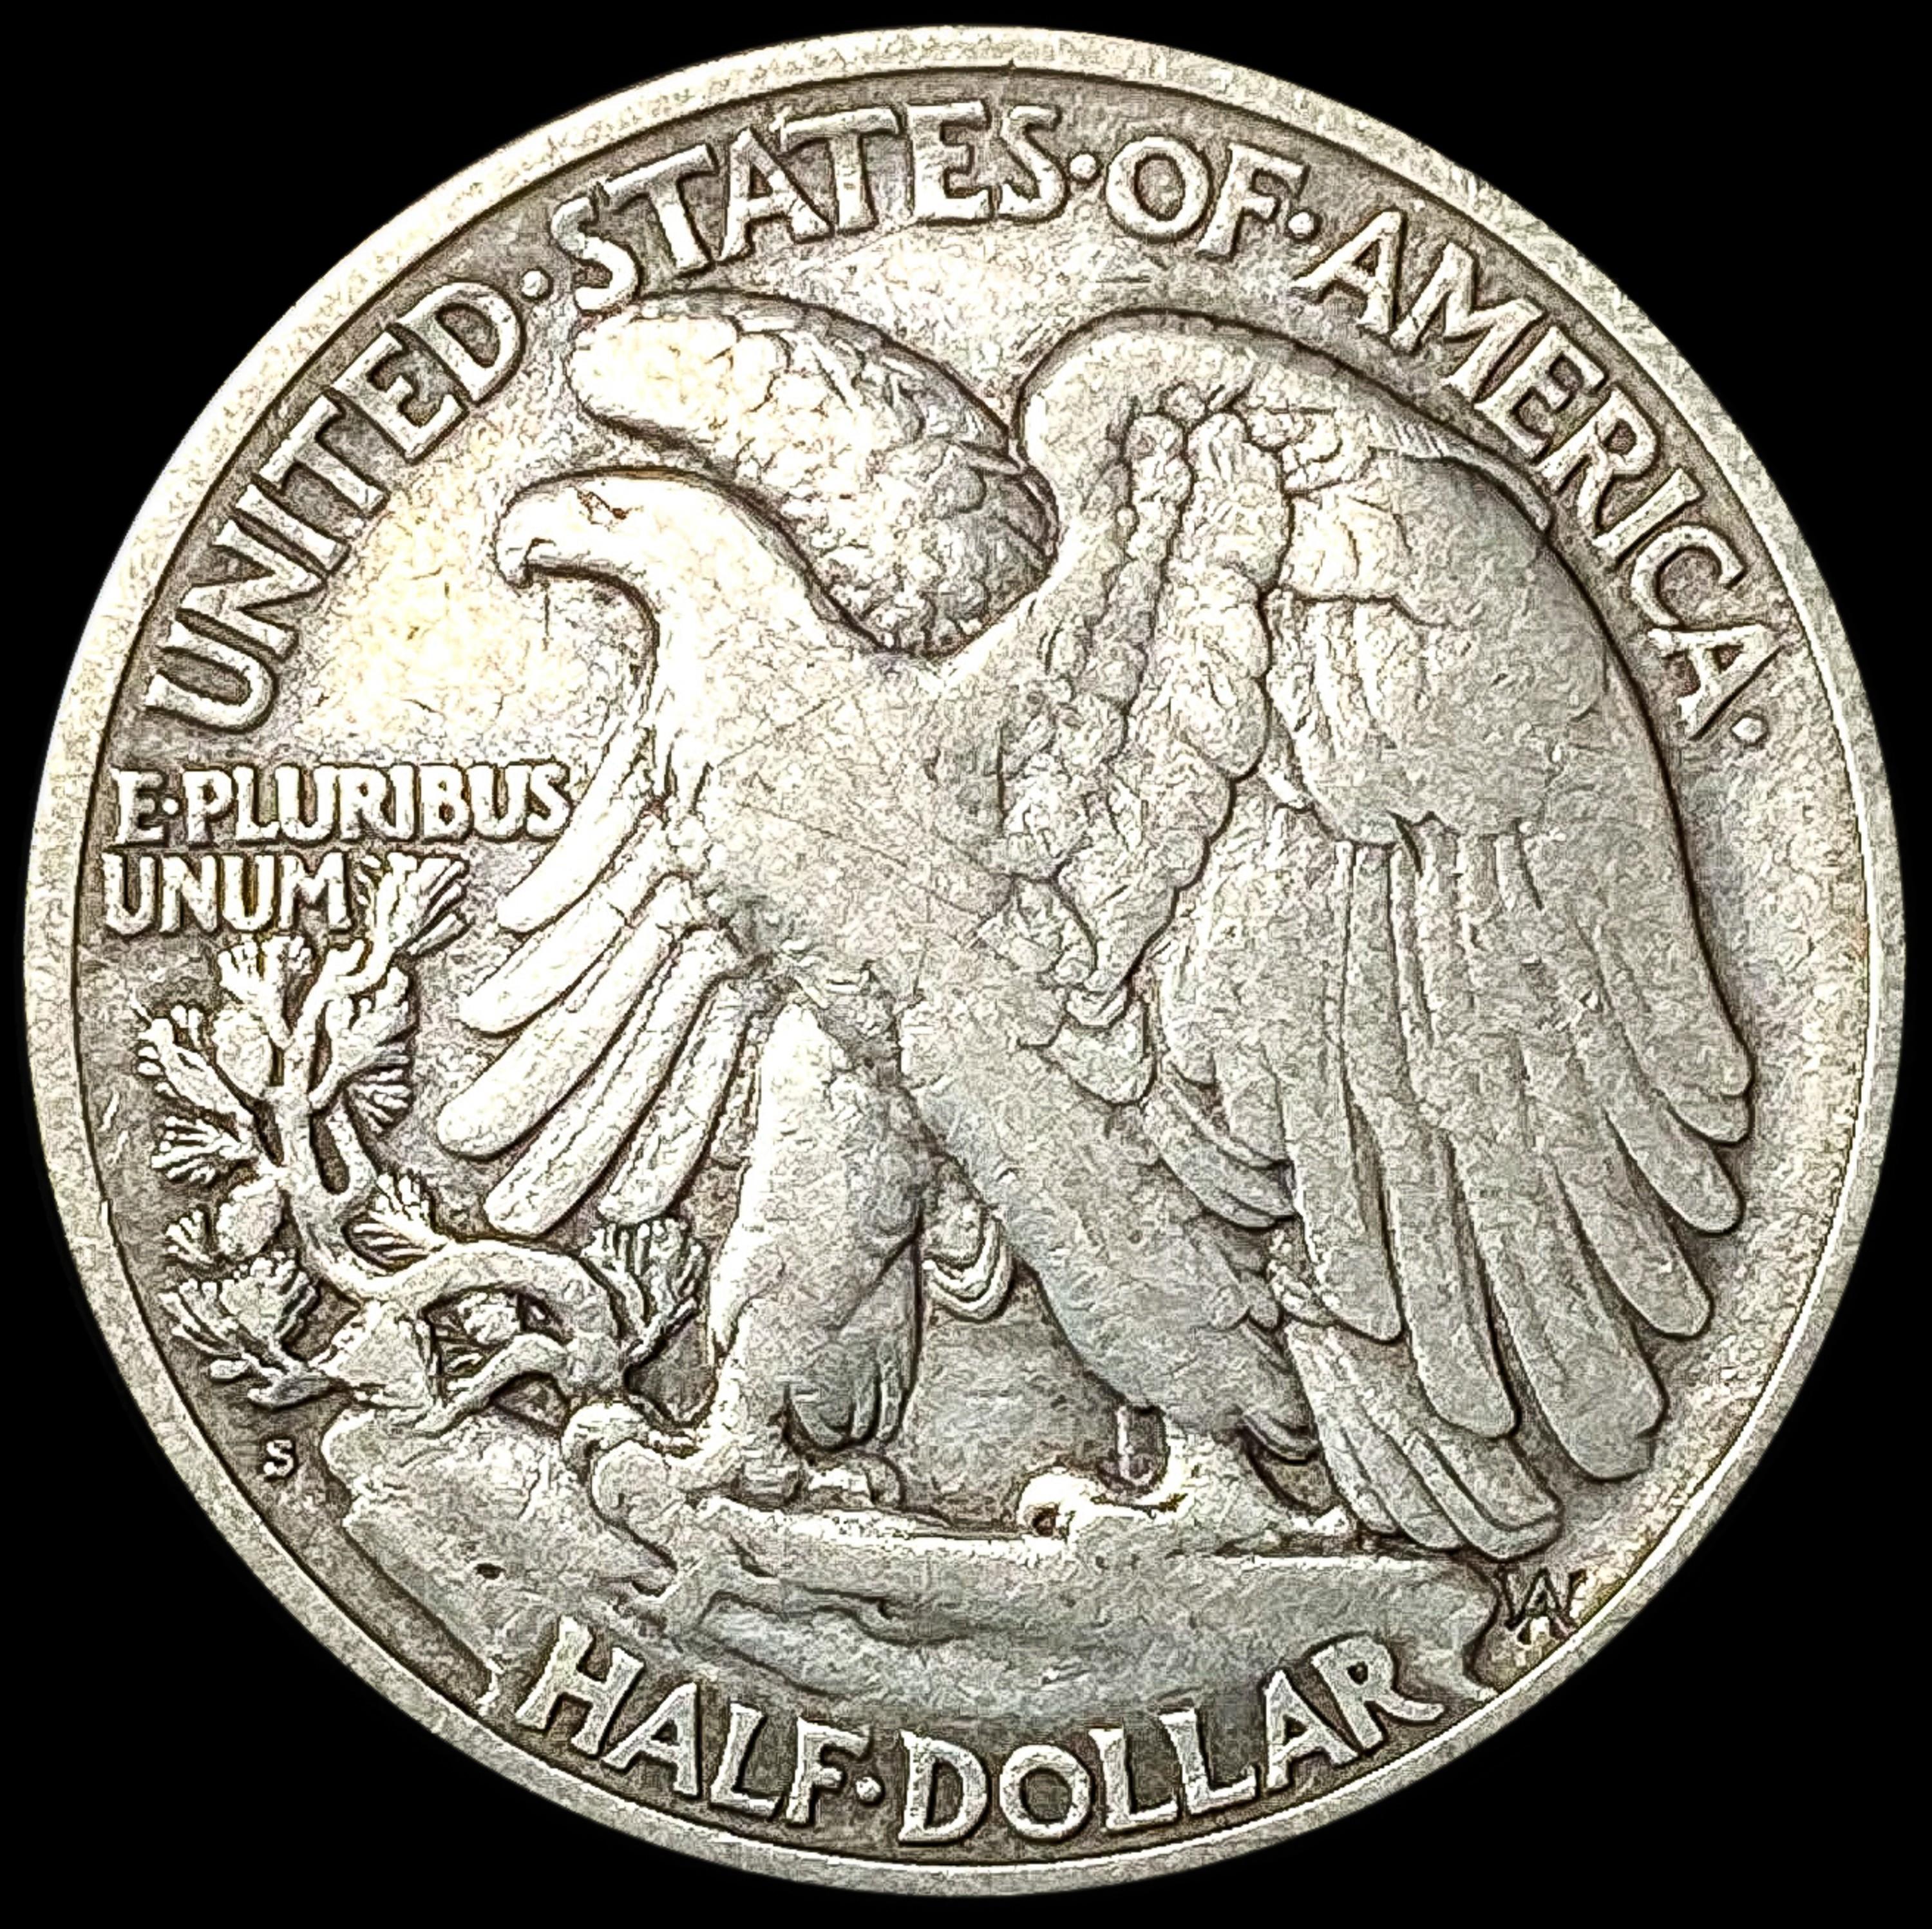 1921-S Walking Liberty Half Dollar LIGHTLY CIRCULA